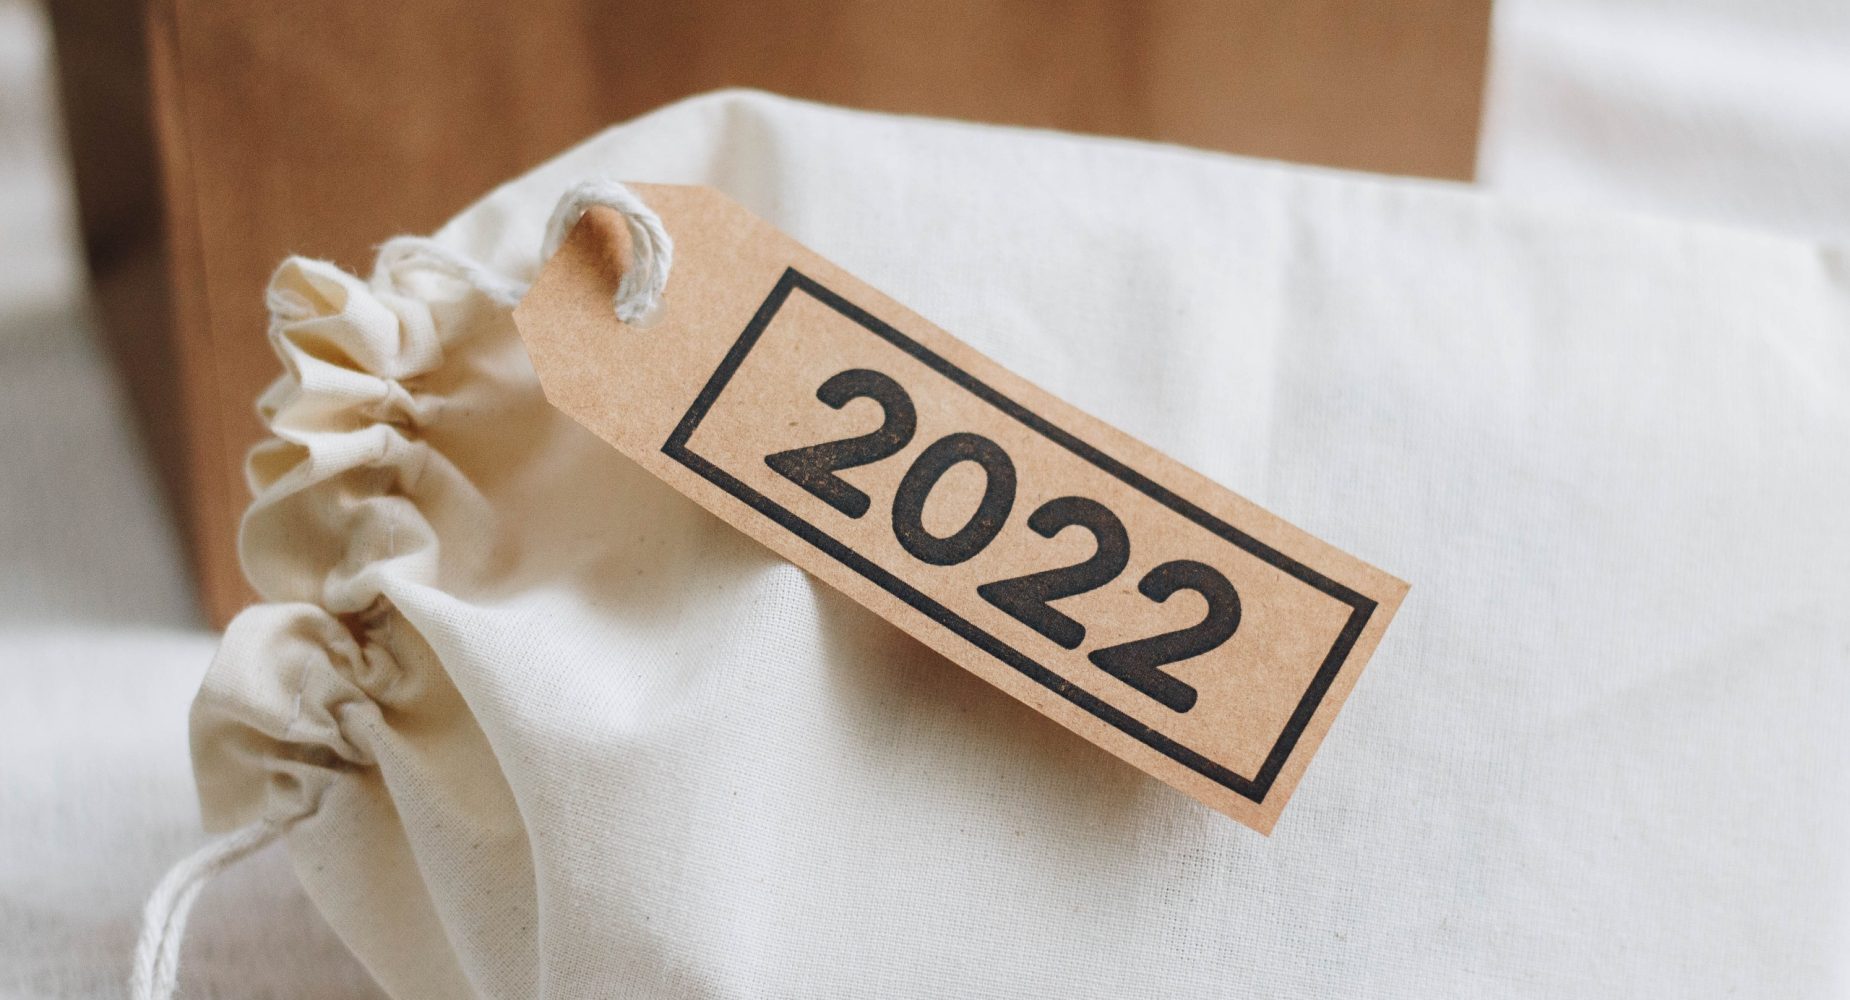 Jaaroverzicht 2022 SAM Medewerkerspanel